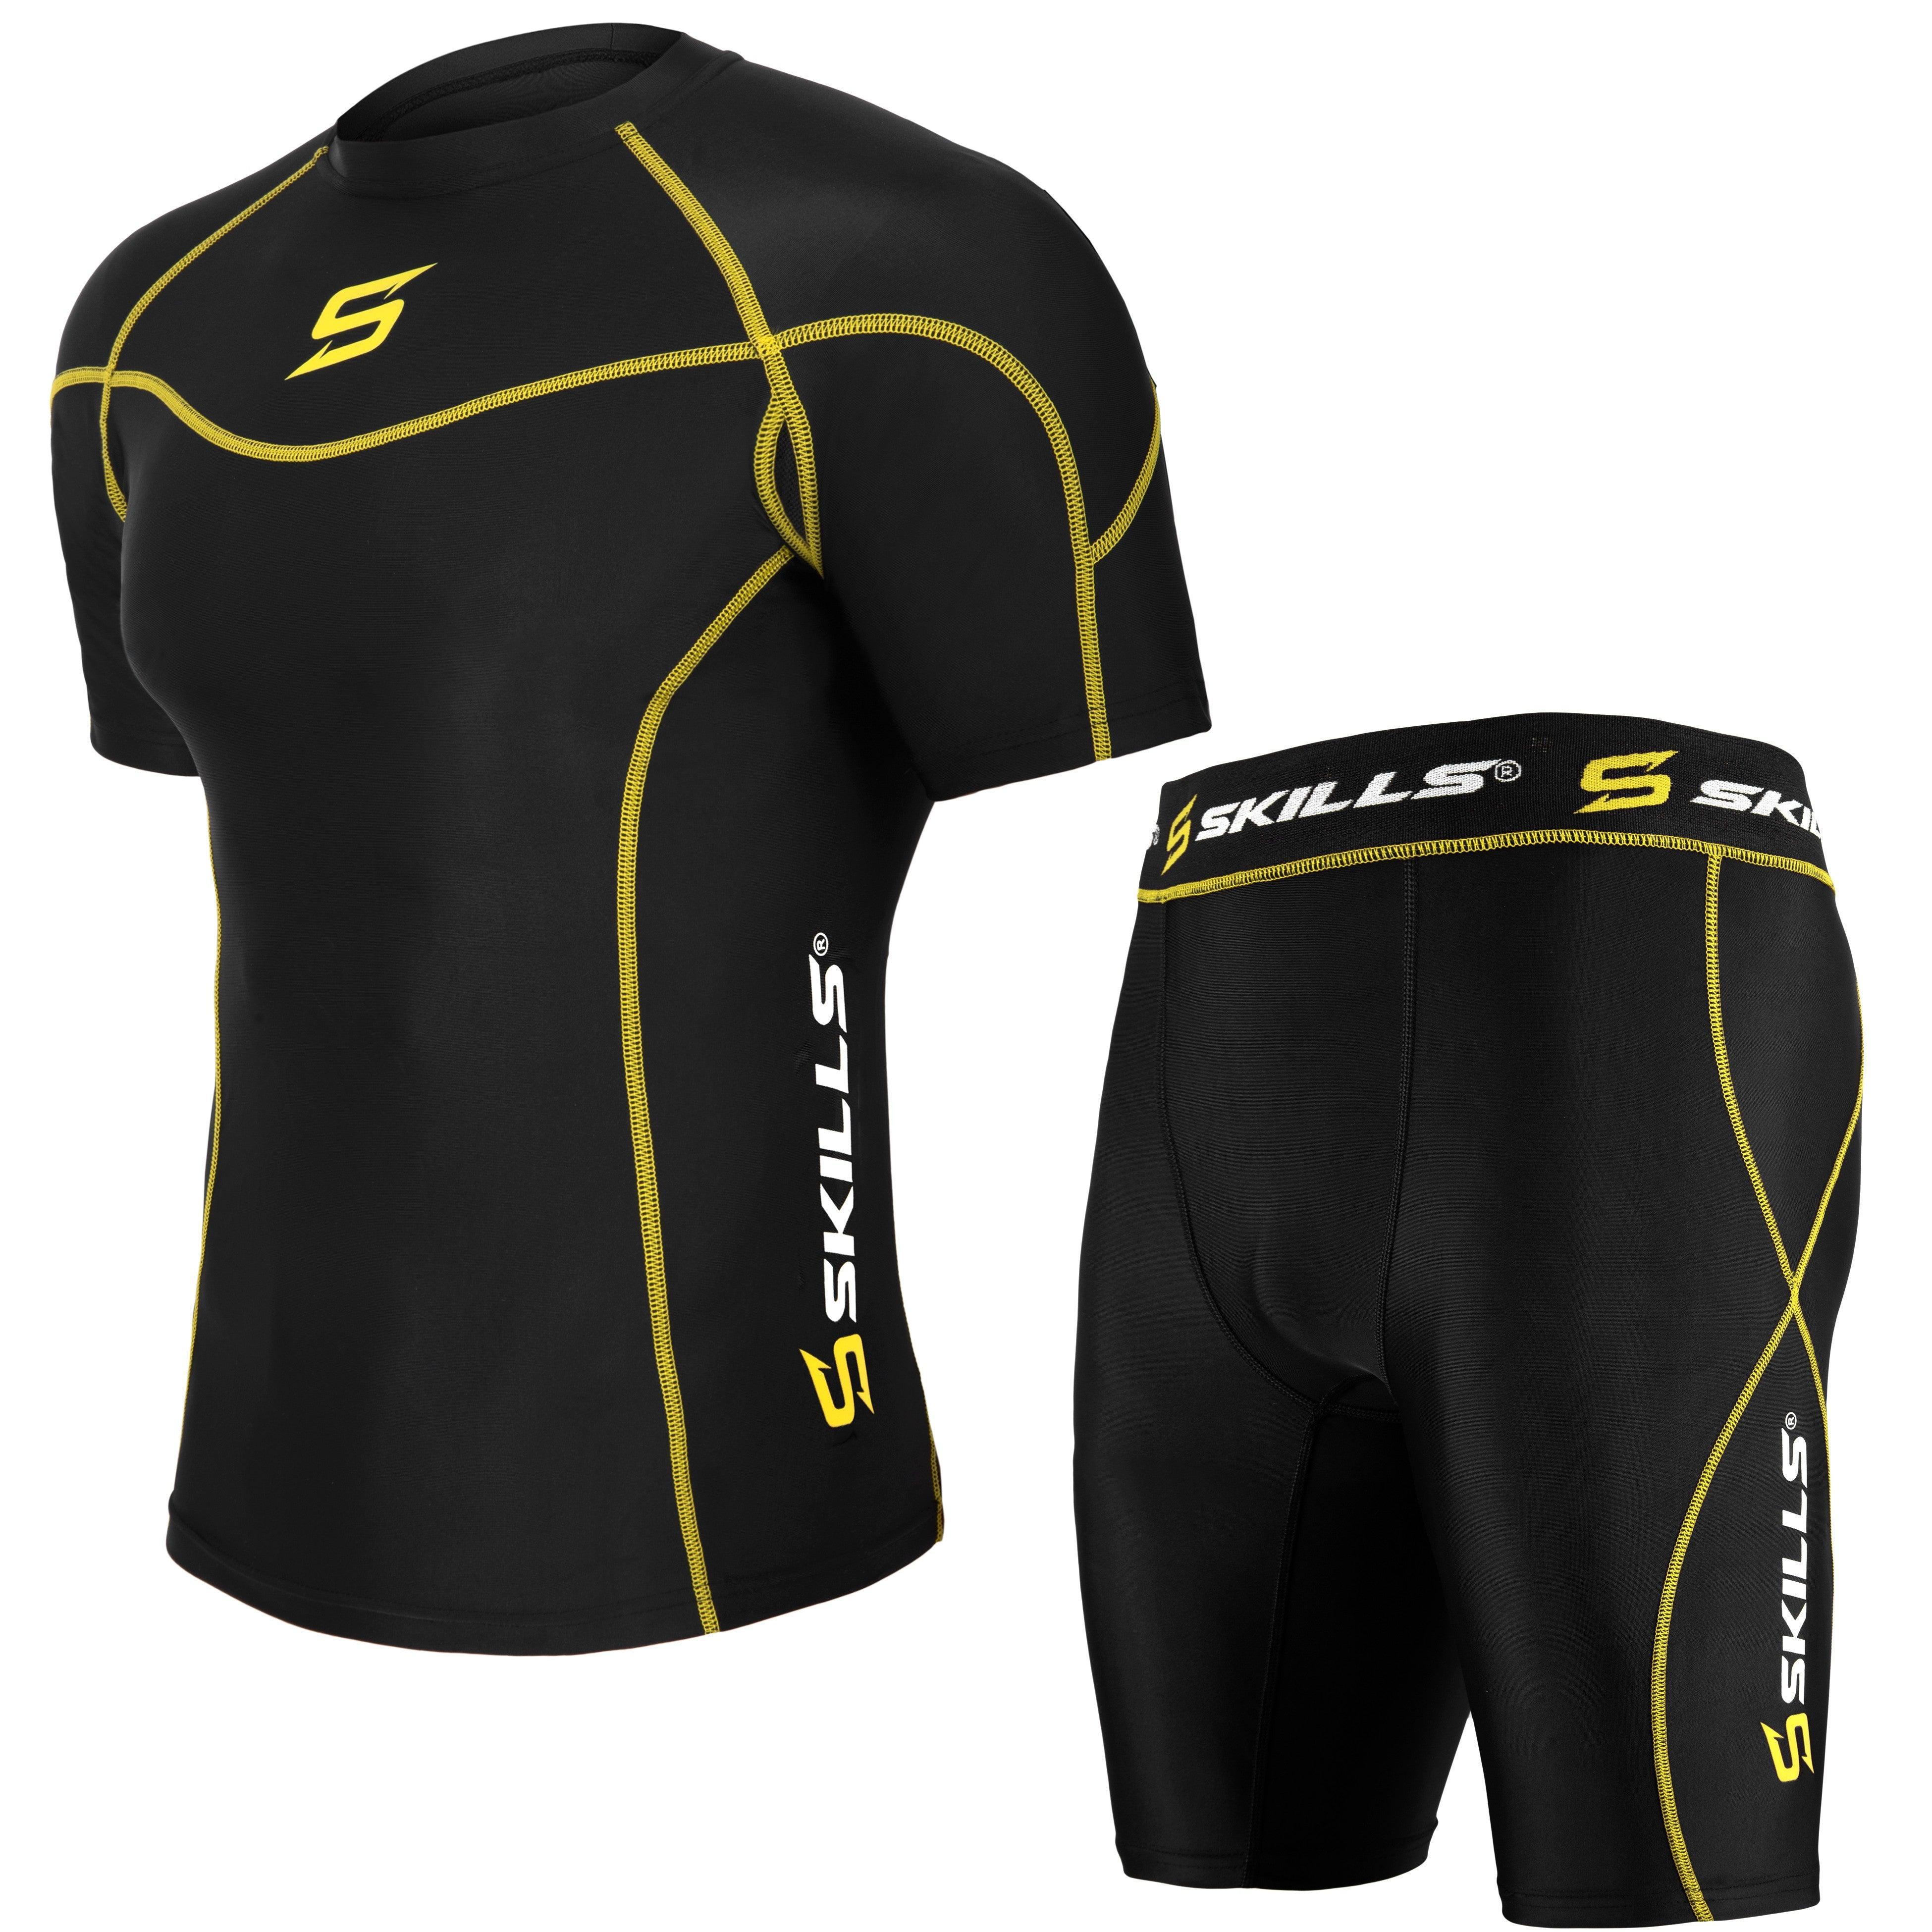 Skills Men's Black / Fluro Compression Base Layer Short sleeve shirt and shorts Set